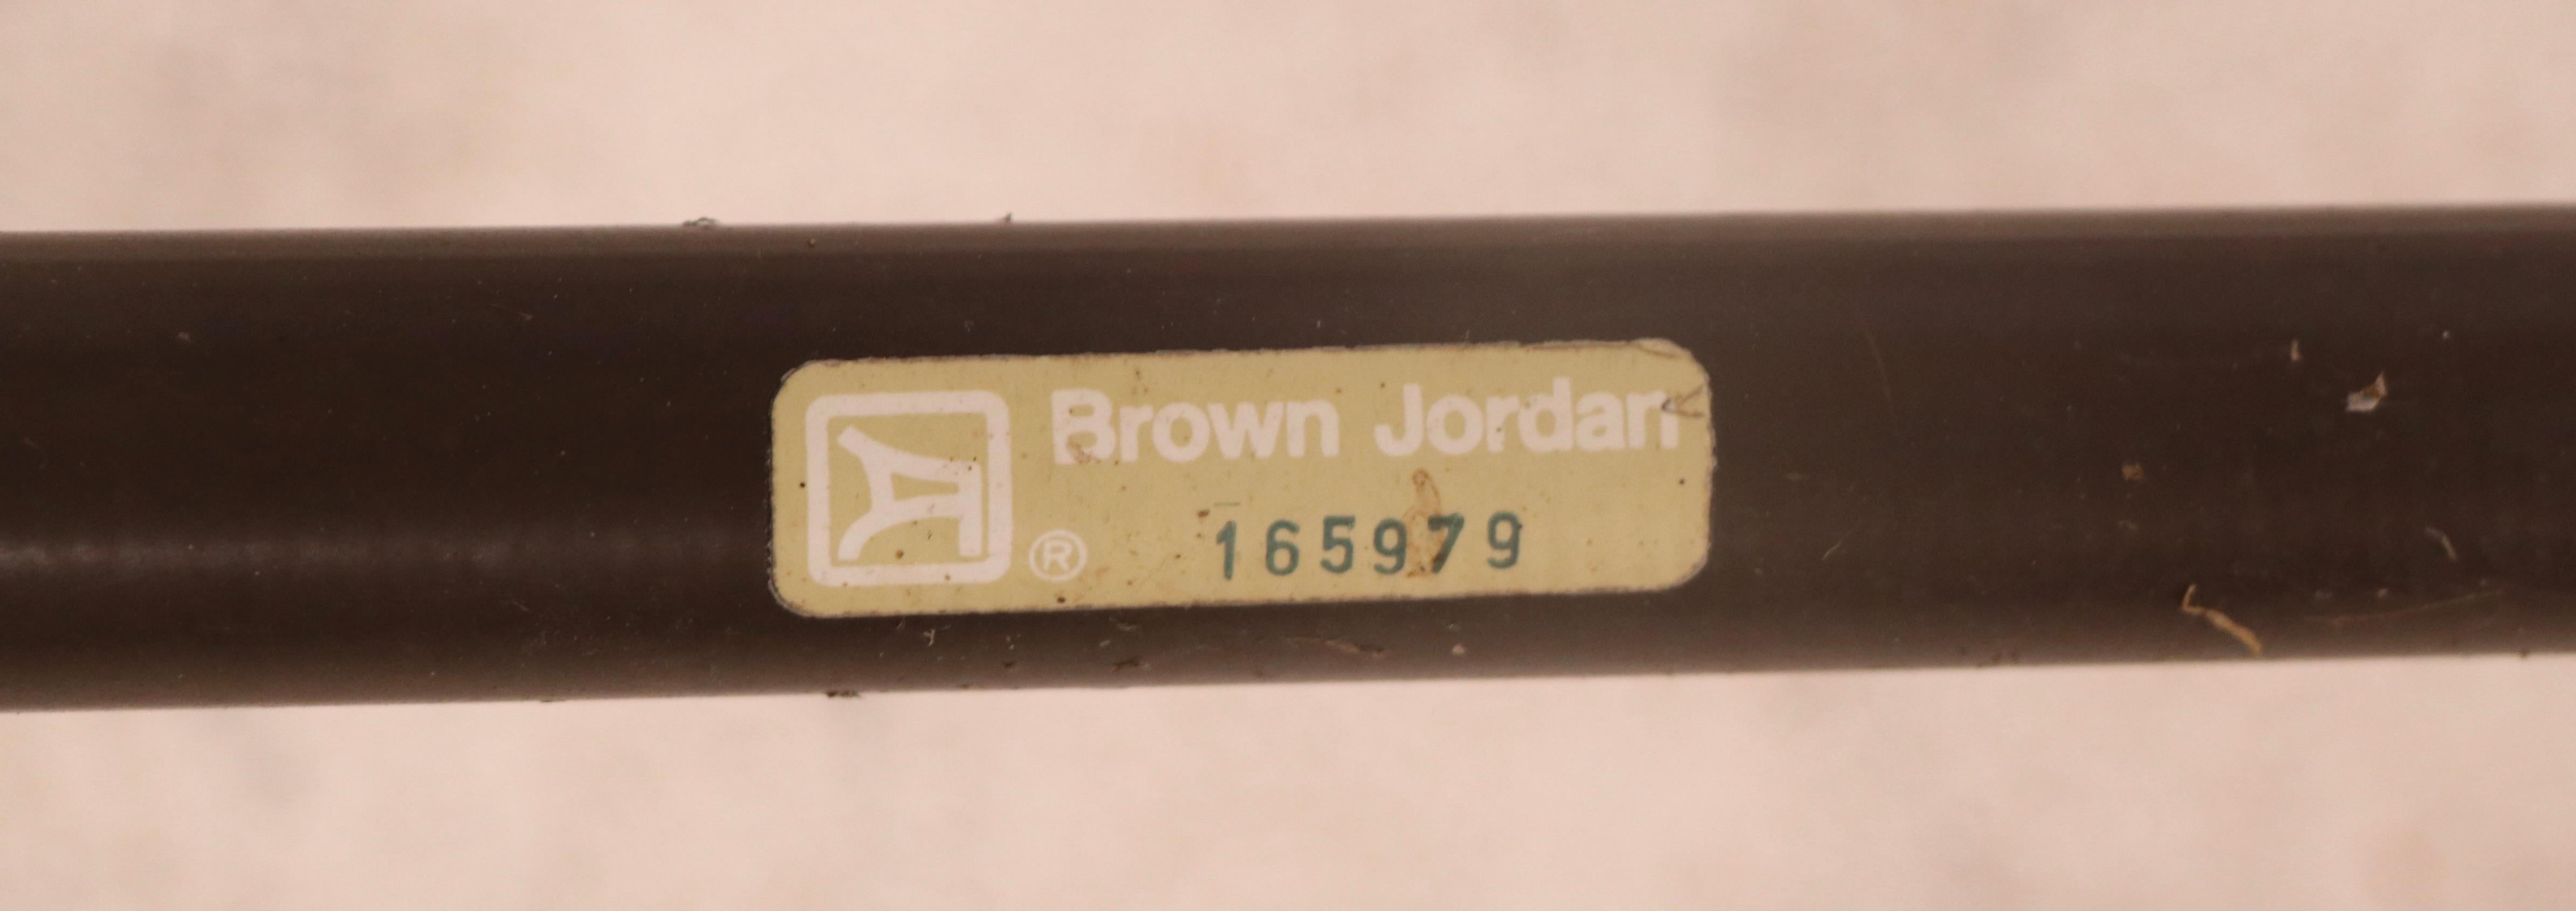 brown jordan chaise lounge